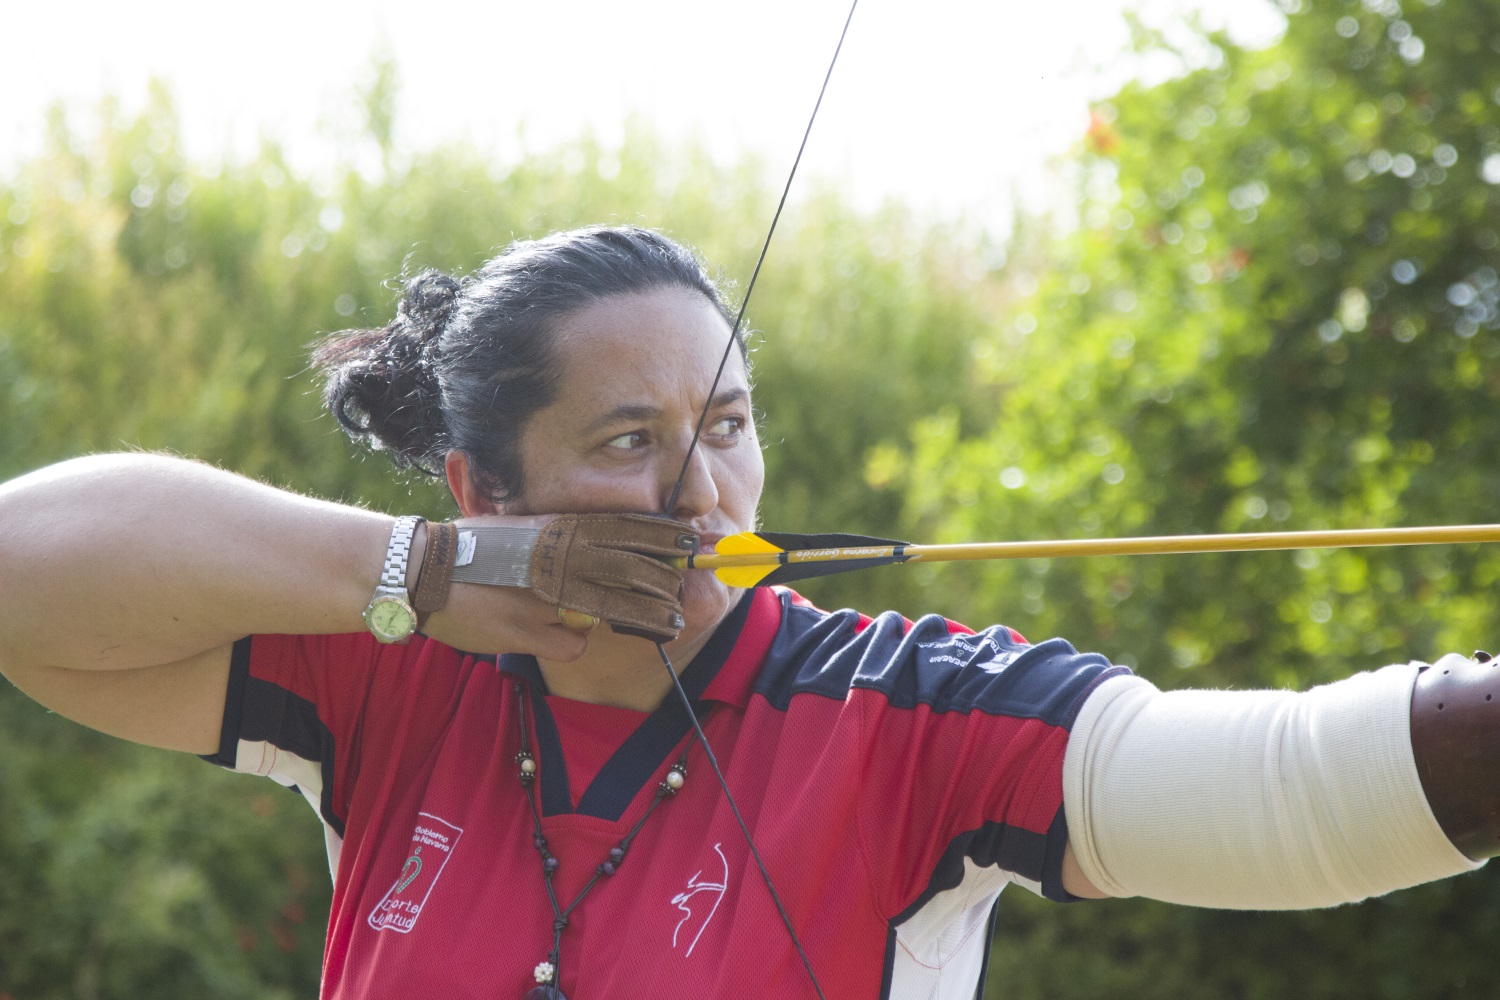 Archery world champion becomes Seipasa's corporate image